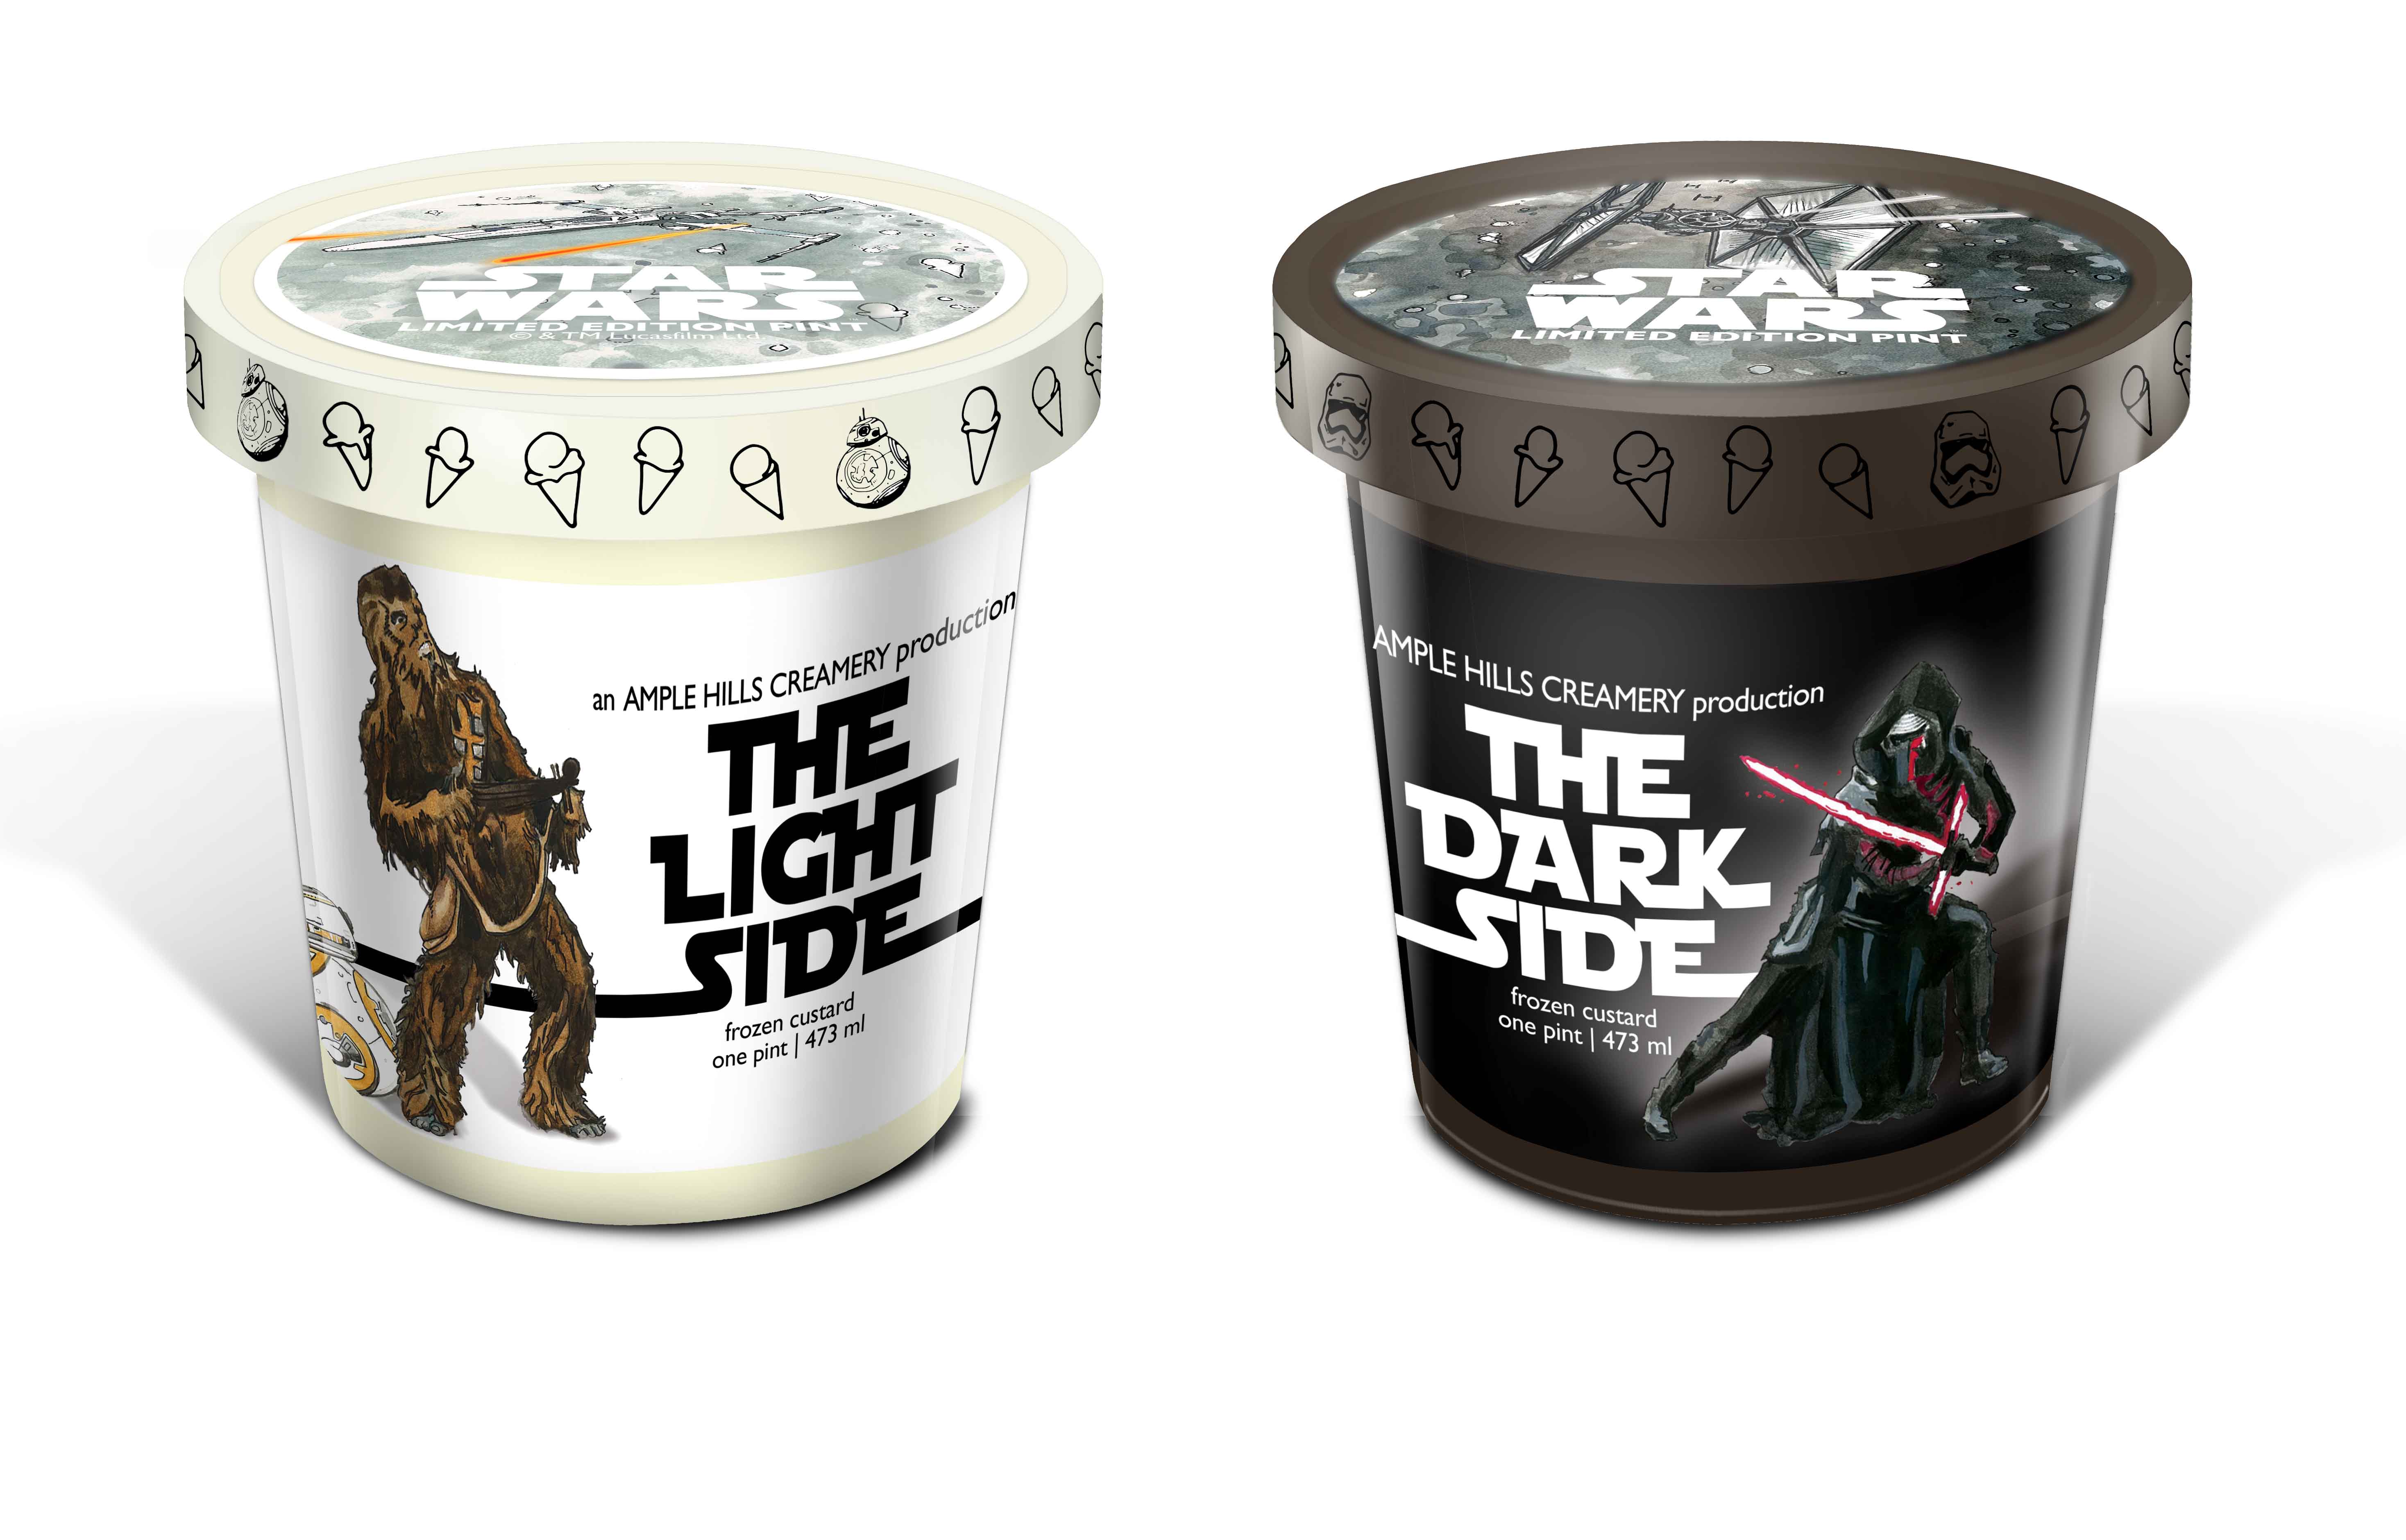 Star Wars ice cream - Ample Hills Creamery